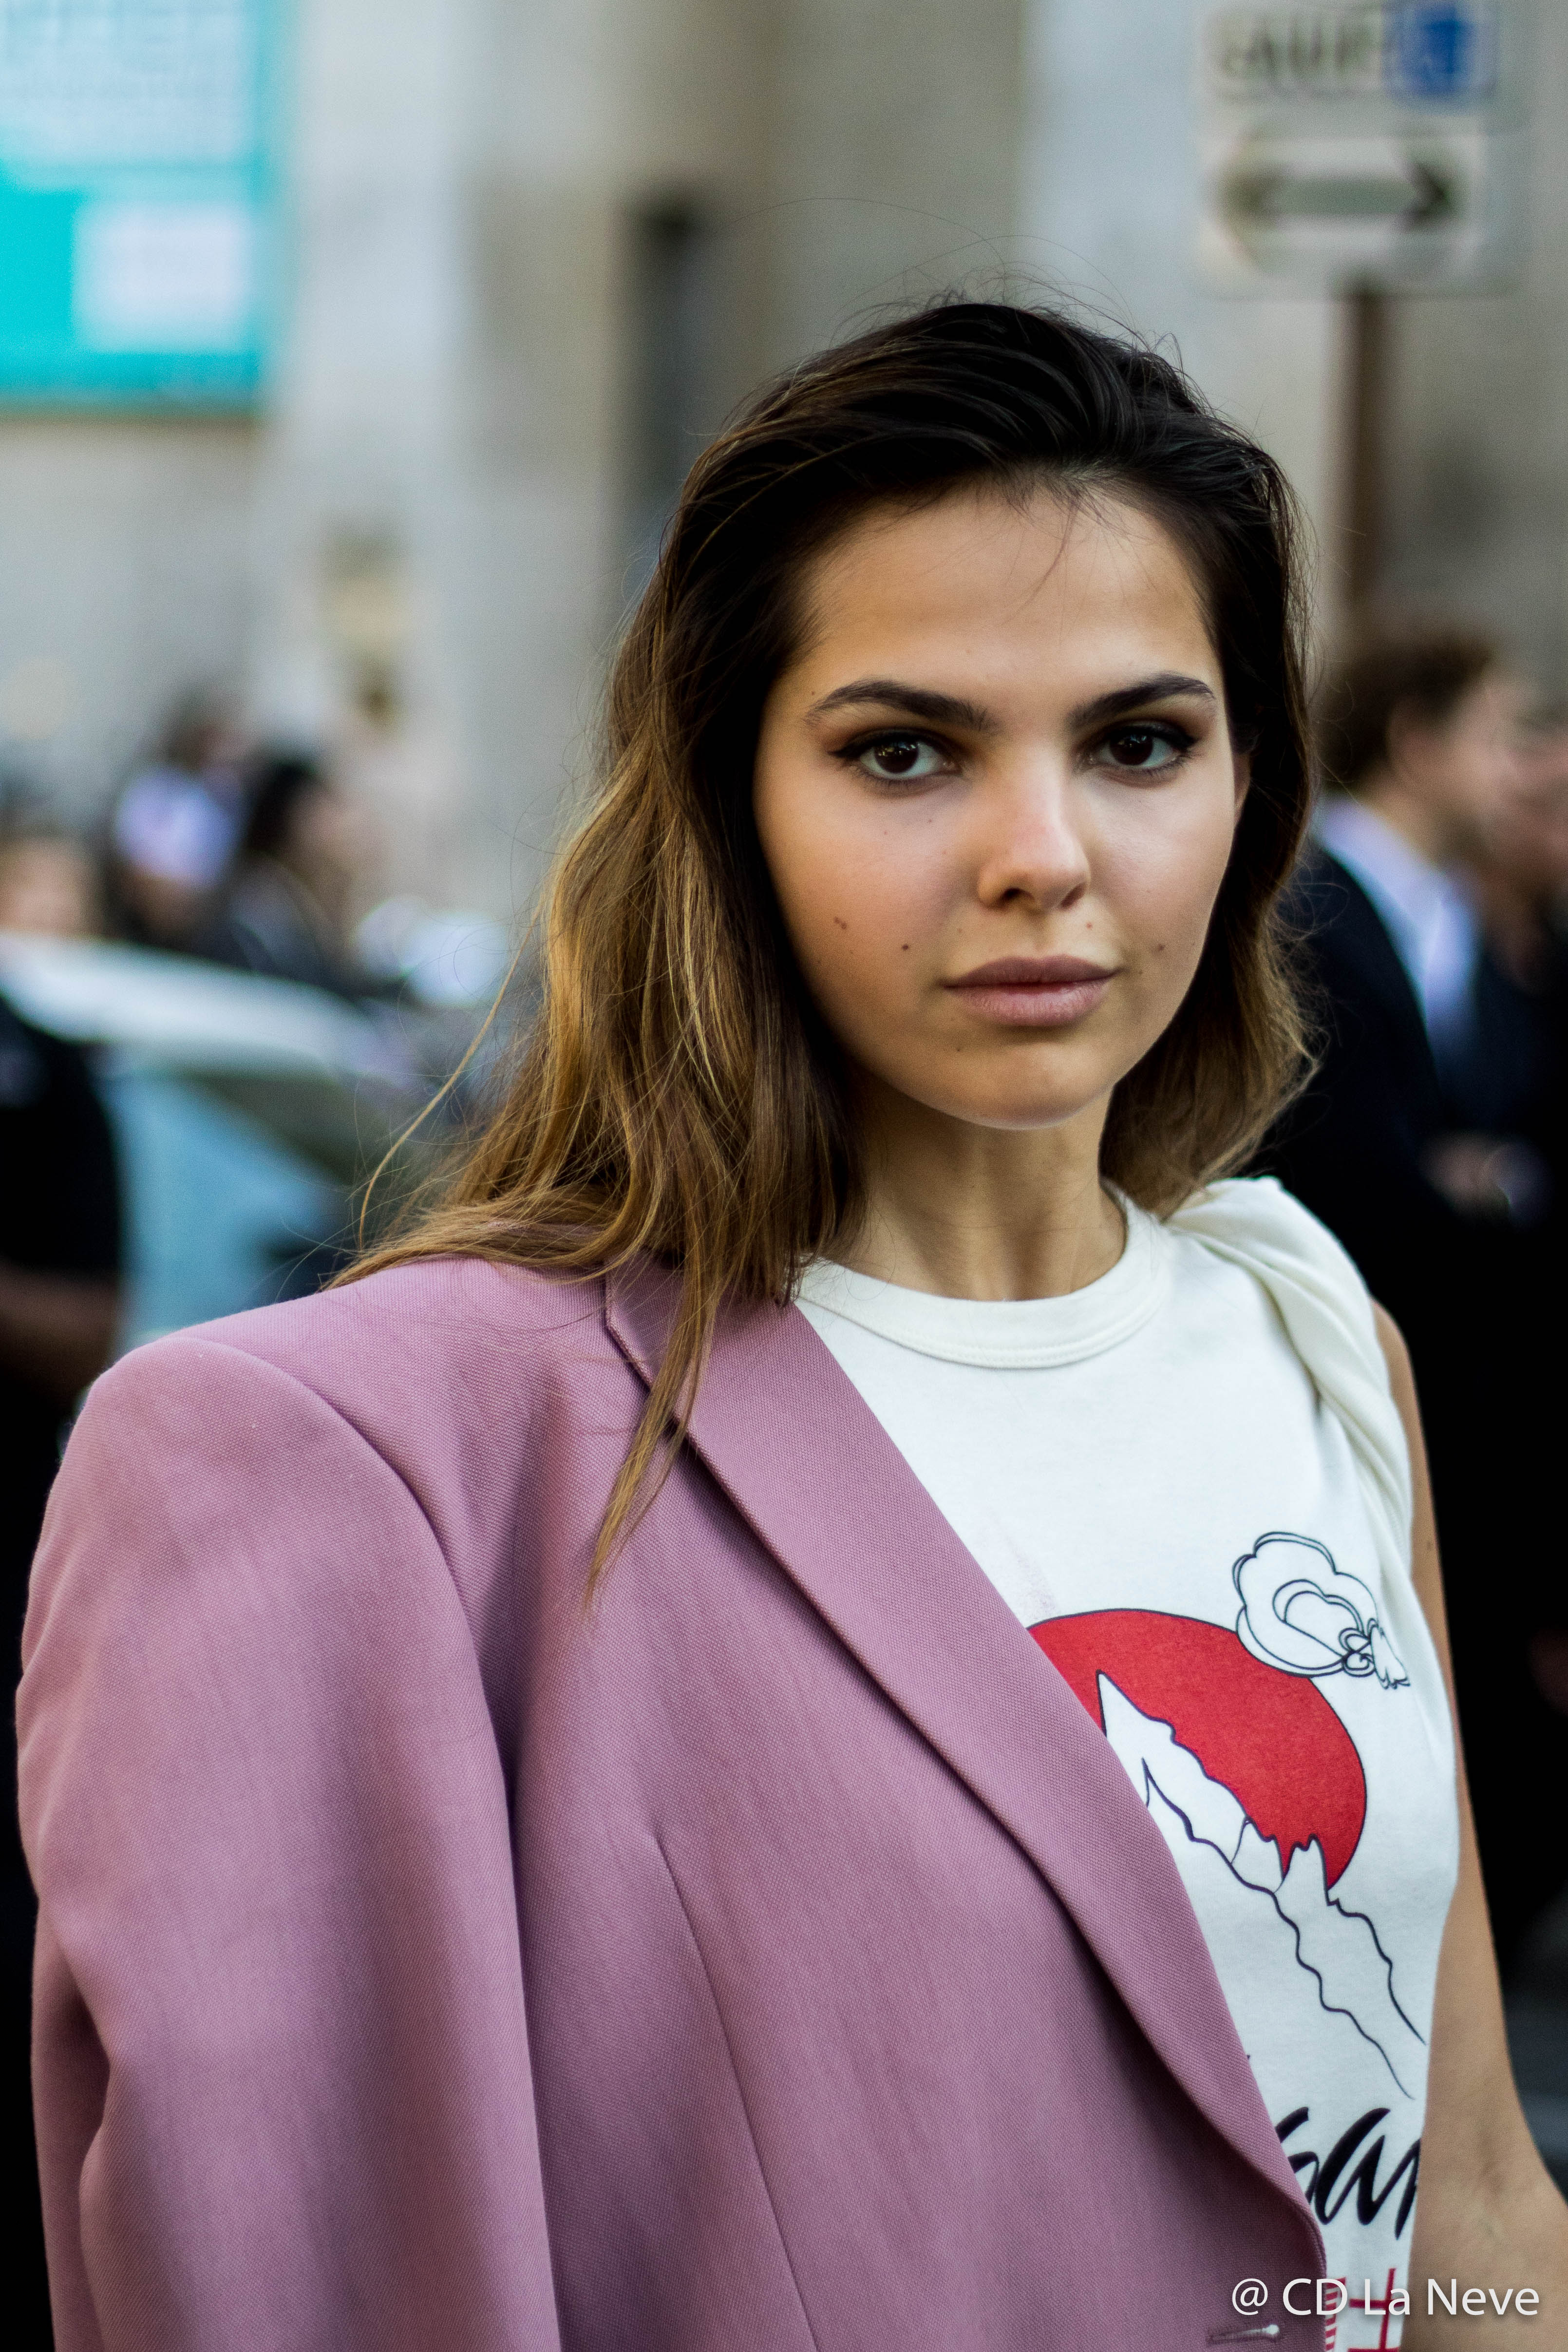 Donia Ciobanu at Paris Fashion Week